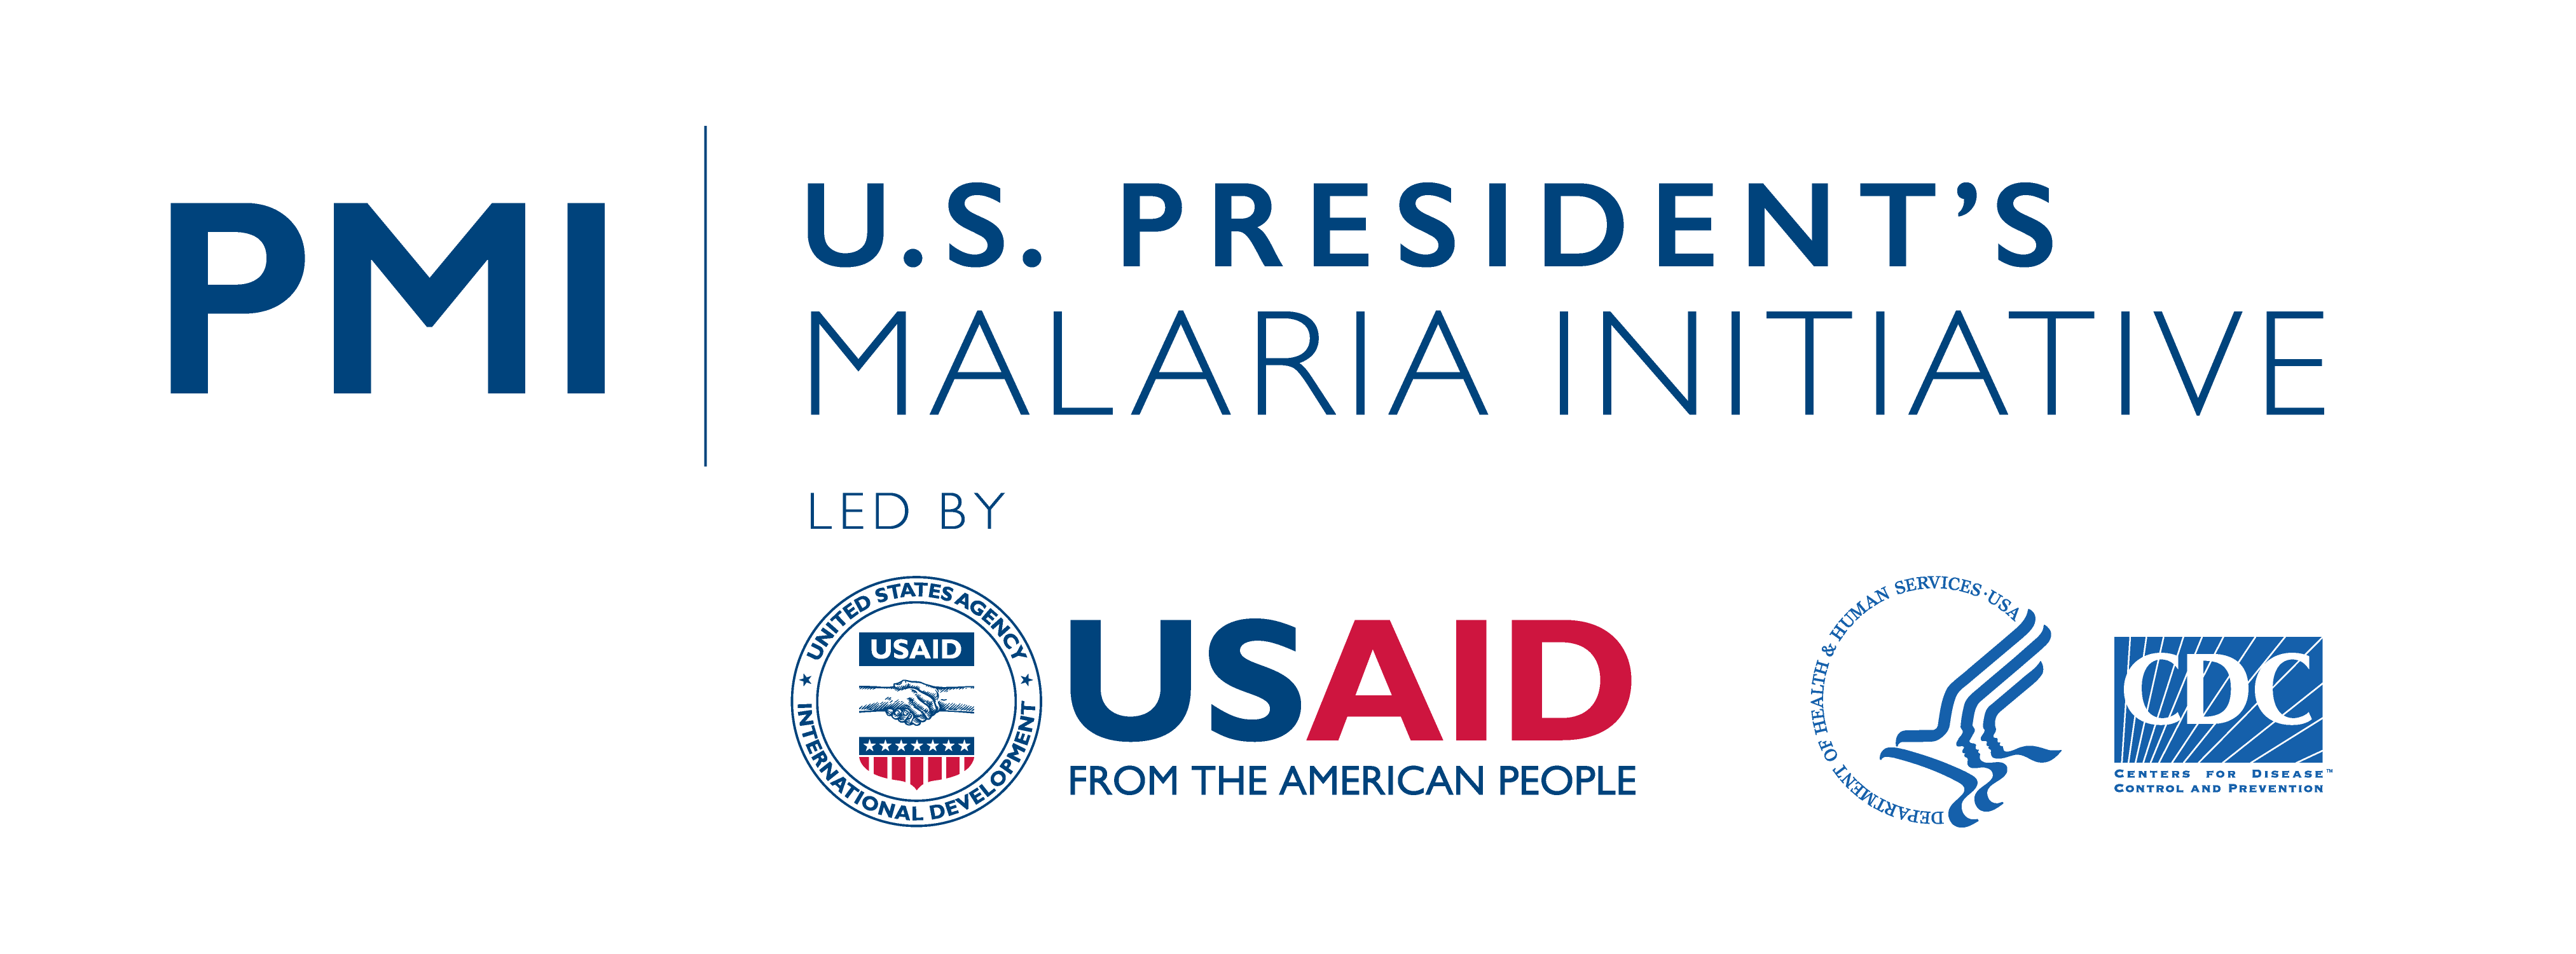 USAID, CDC, SAMHSA, and U.S. President's Malaria Initiative logo